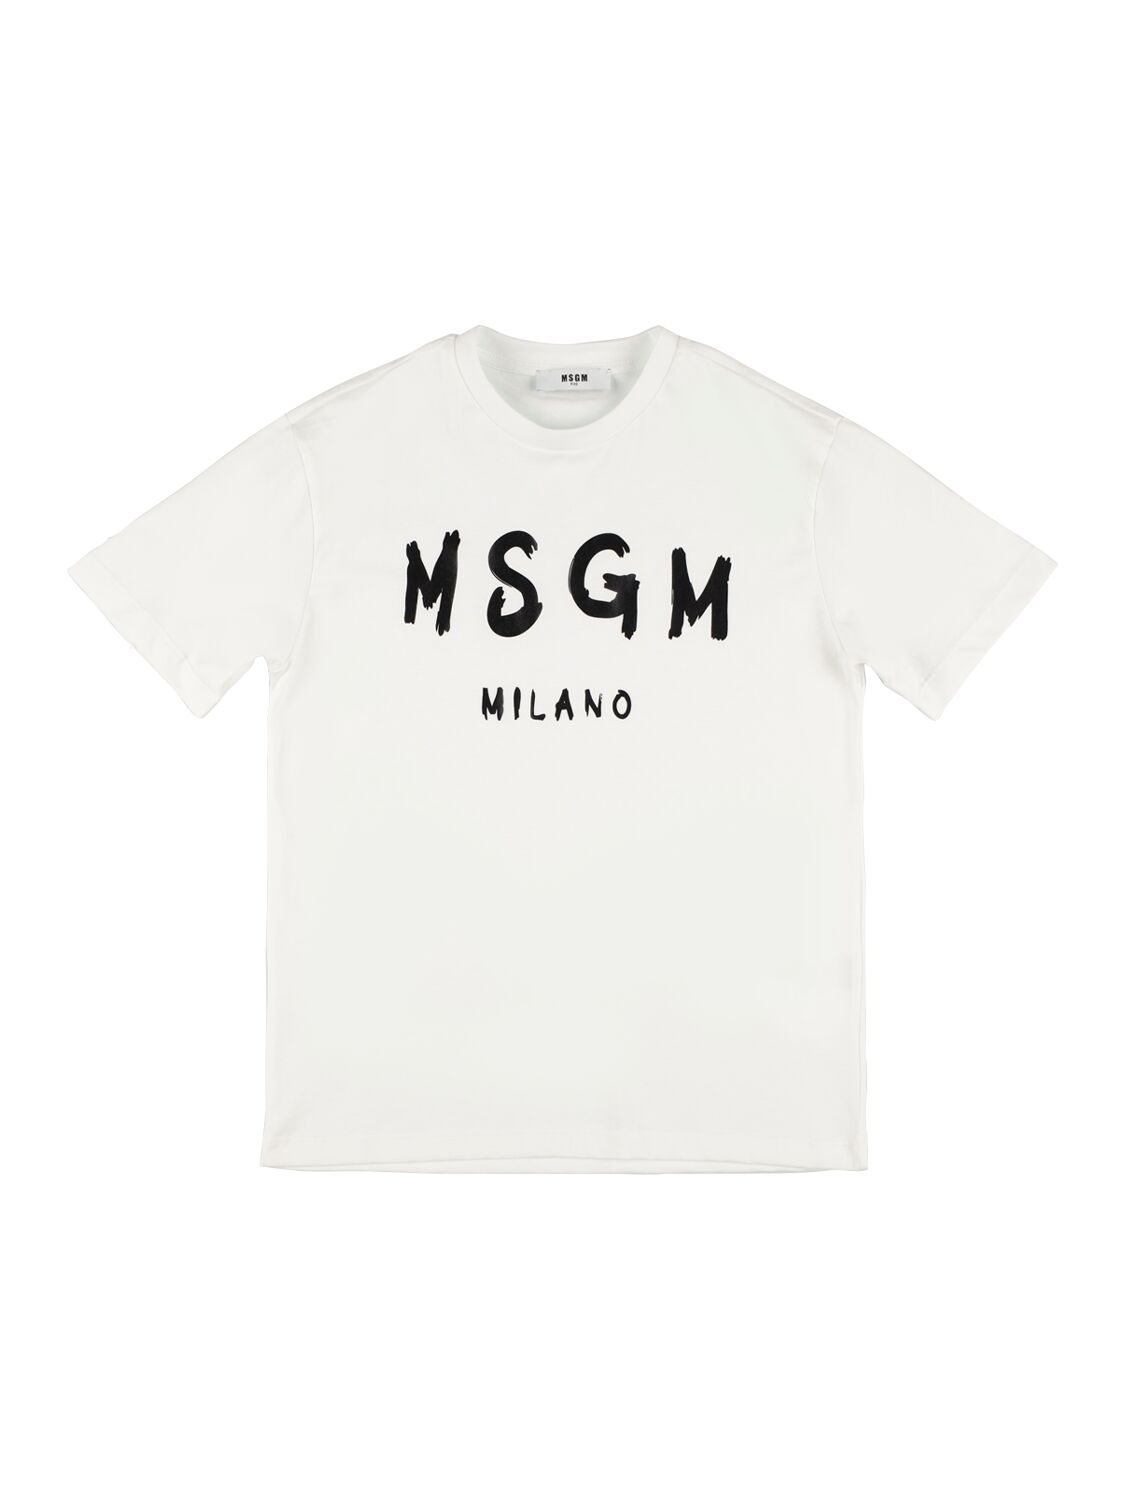 Msgm Kids' Printed Logo Cotton Jersey T-shirt In White